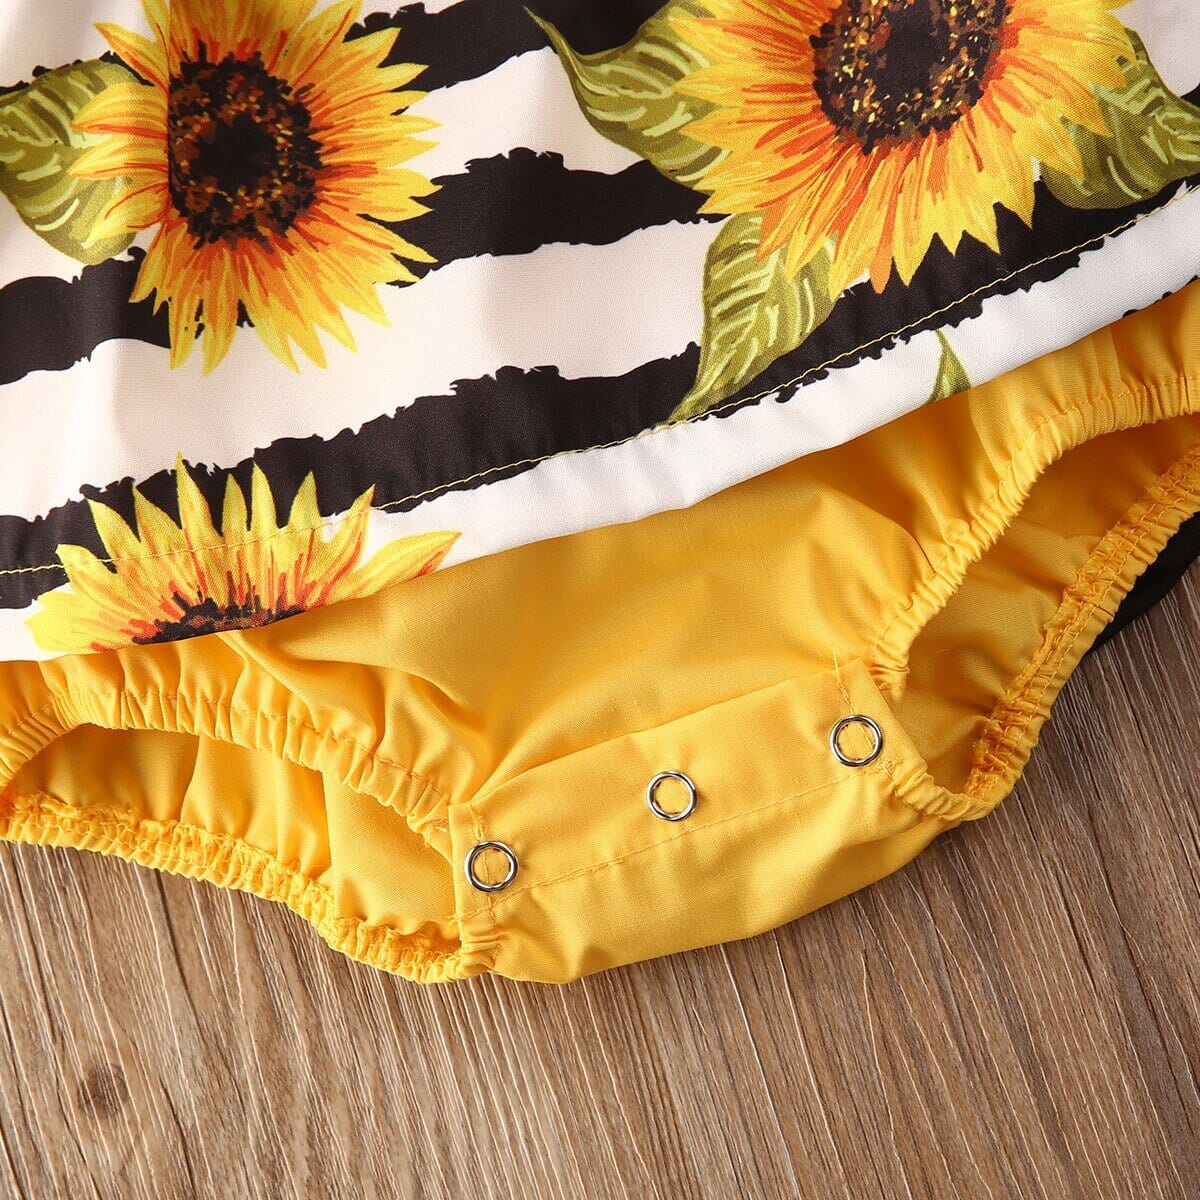 Sunflower Lace Ruffle Romper & Headband Set for Newborn Girls - RoniCorn